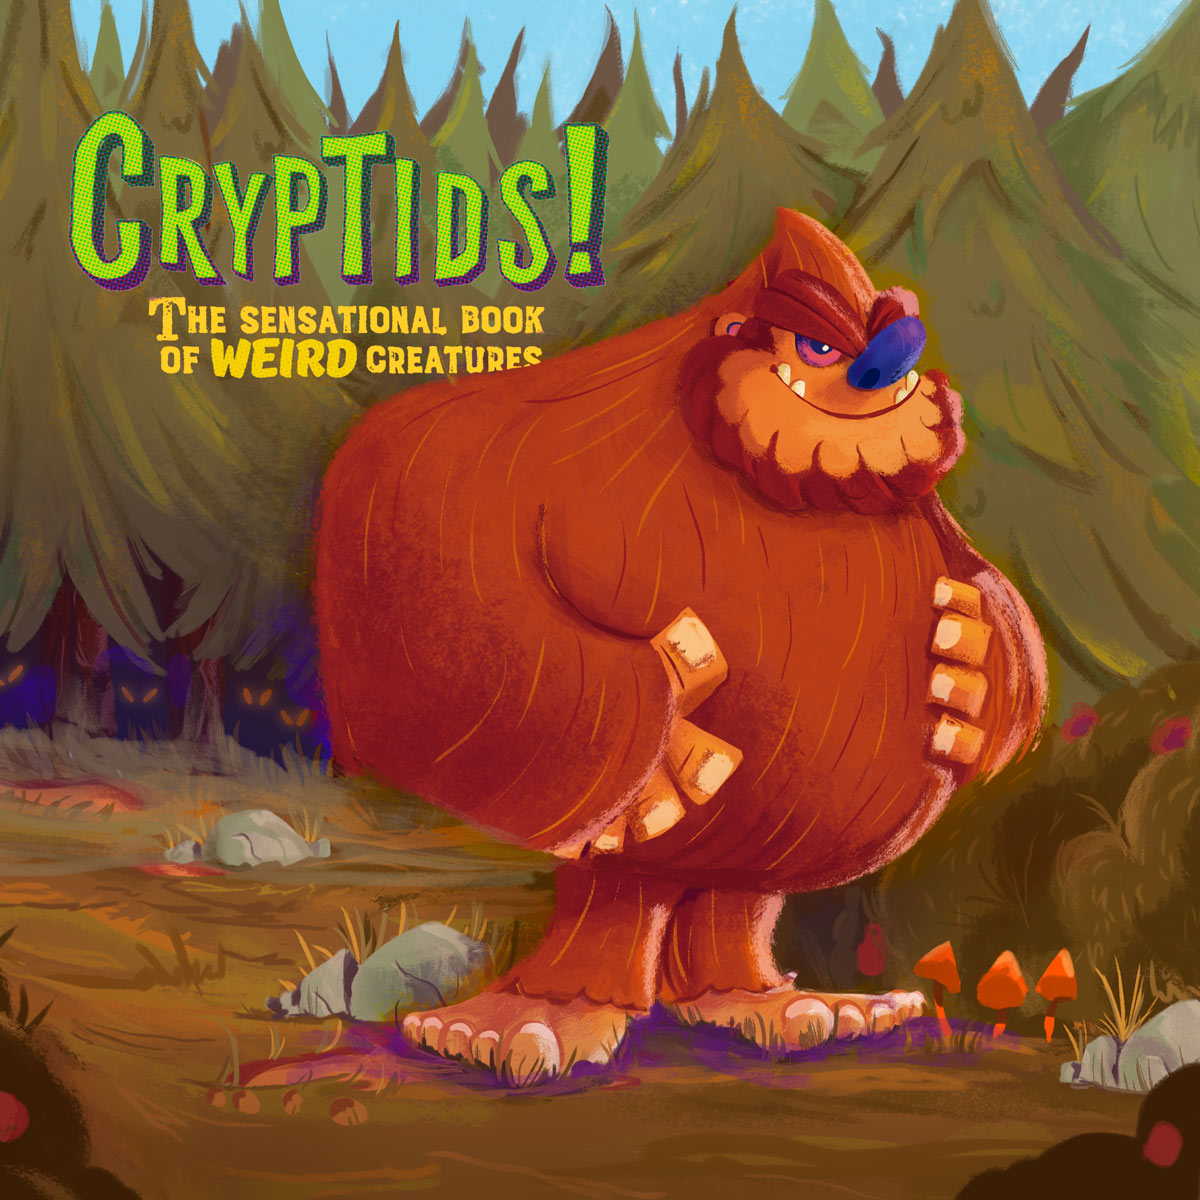 Cryptids! The Sensational Book of Weird Creatures